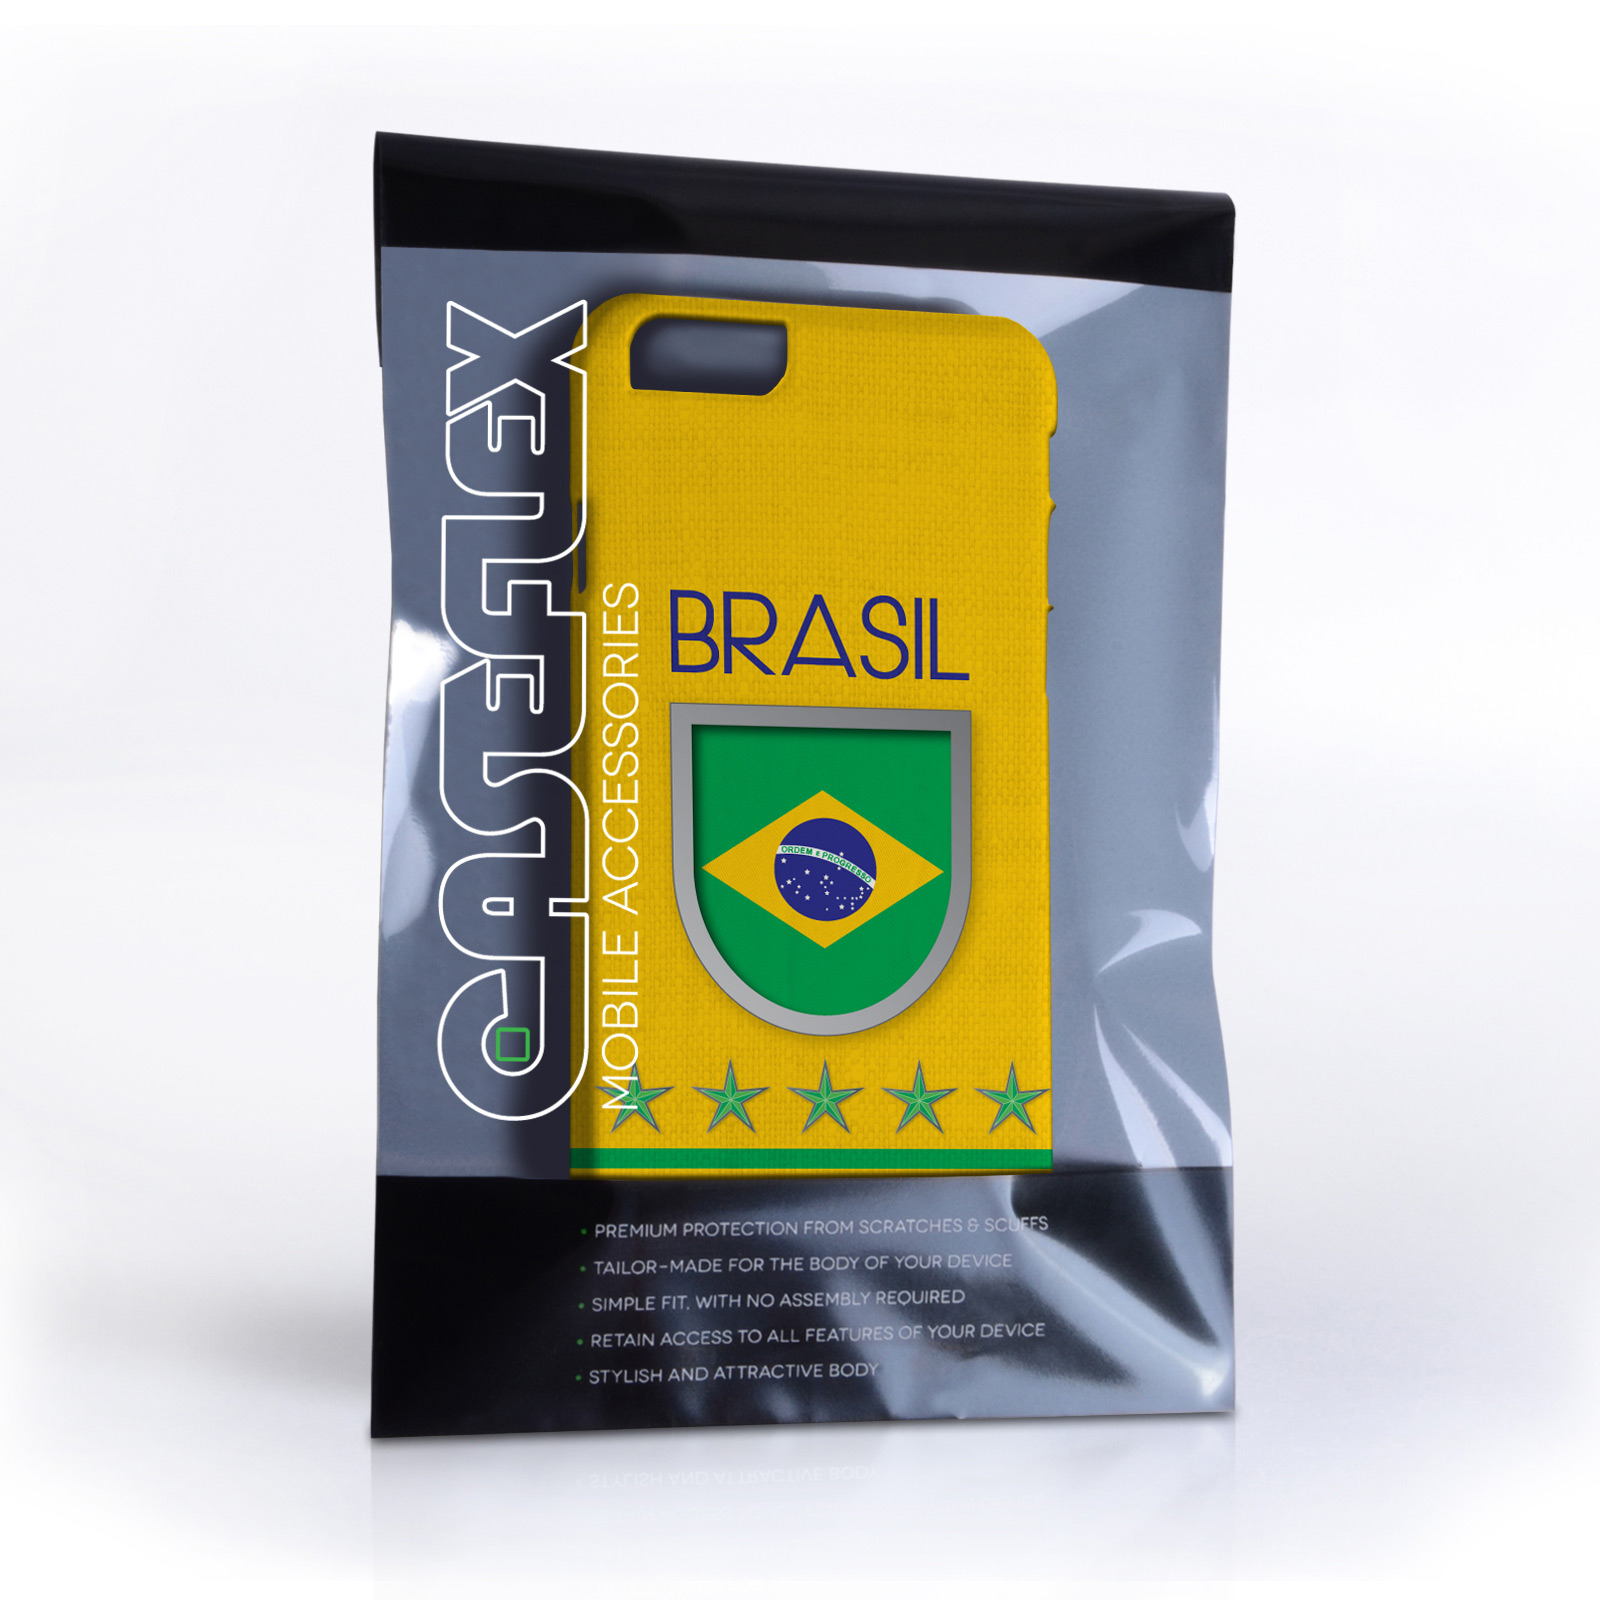 Caseflex iPhone 6 and 6s Brazil World Cup Case